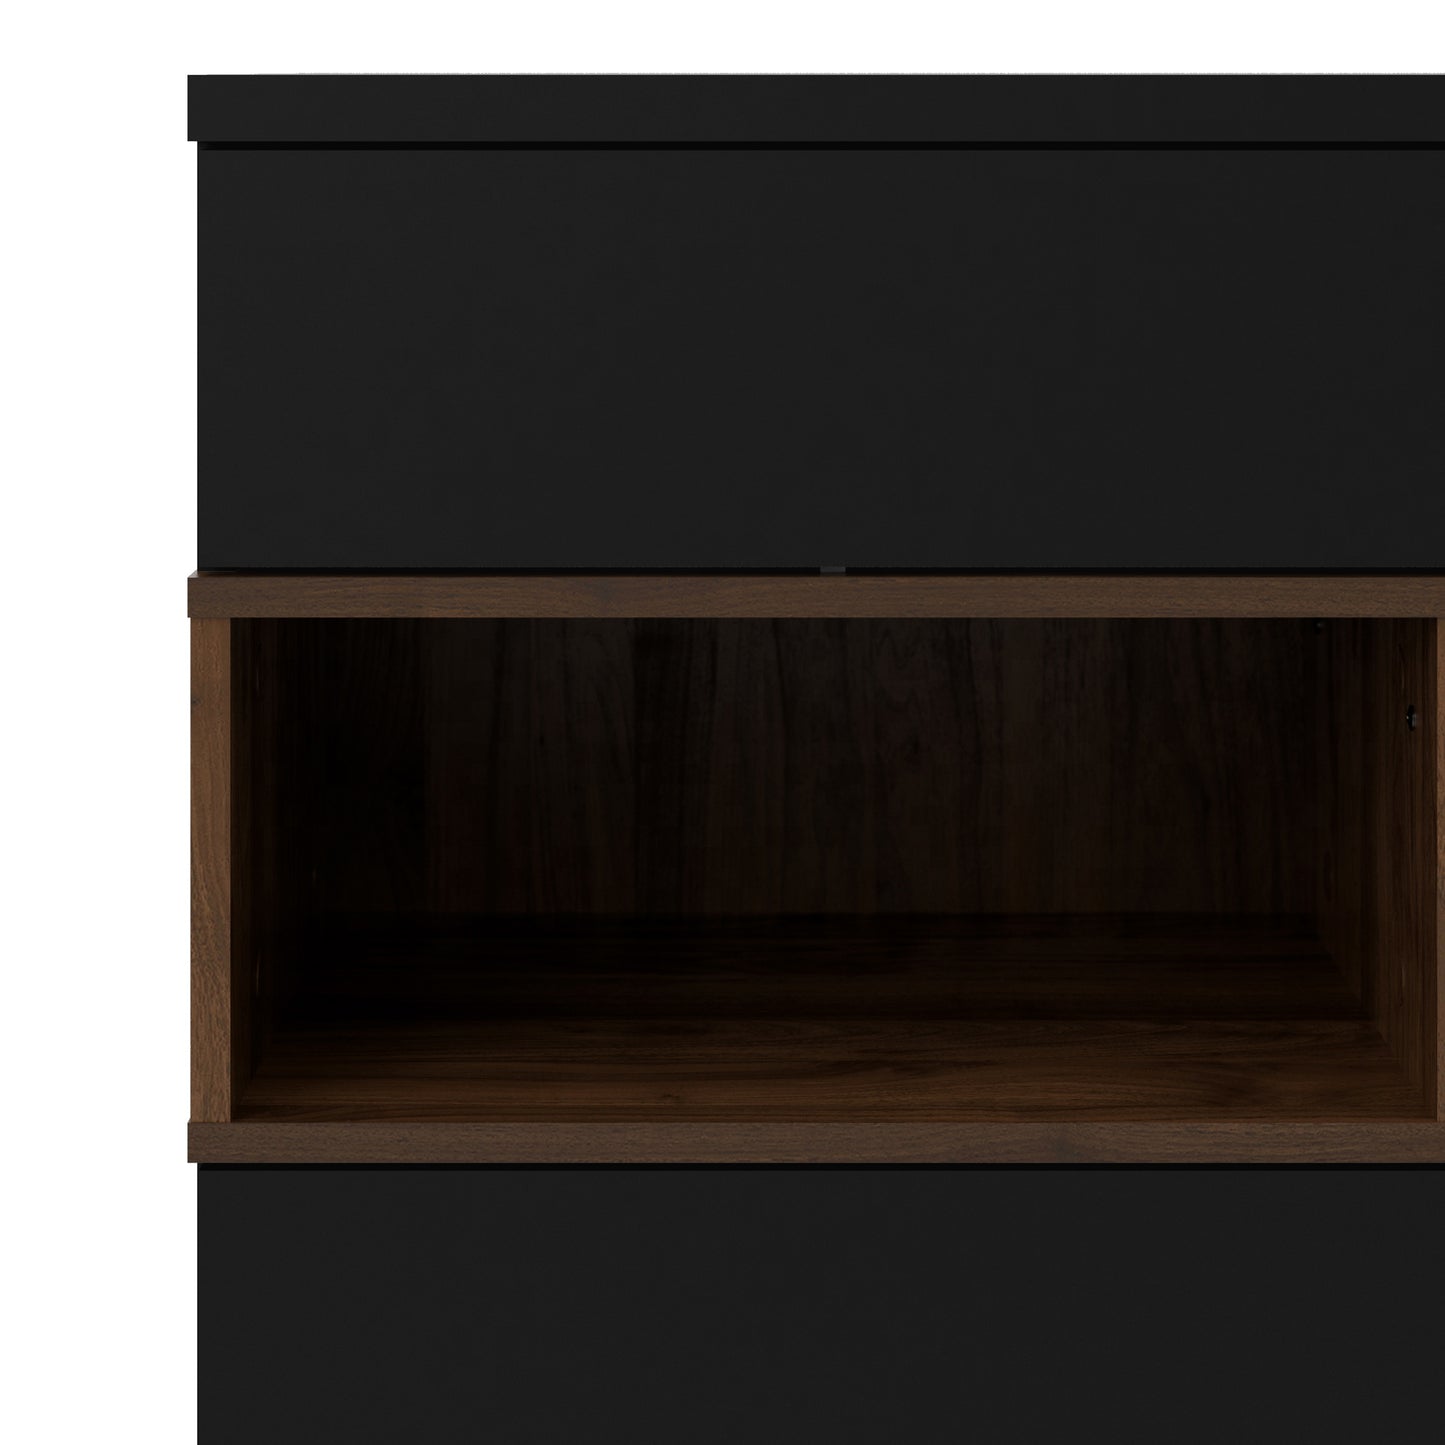 Roomers Sideboard 2 Drawers 1 Door in Black and Walnut